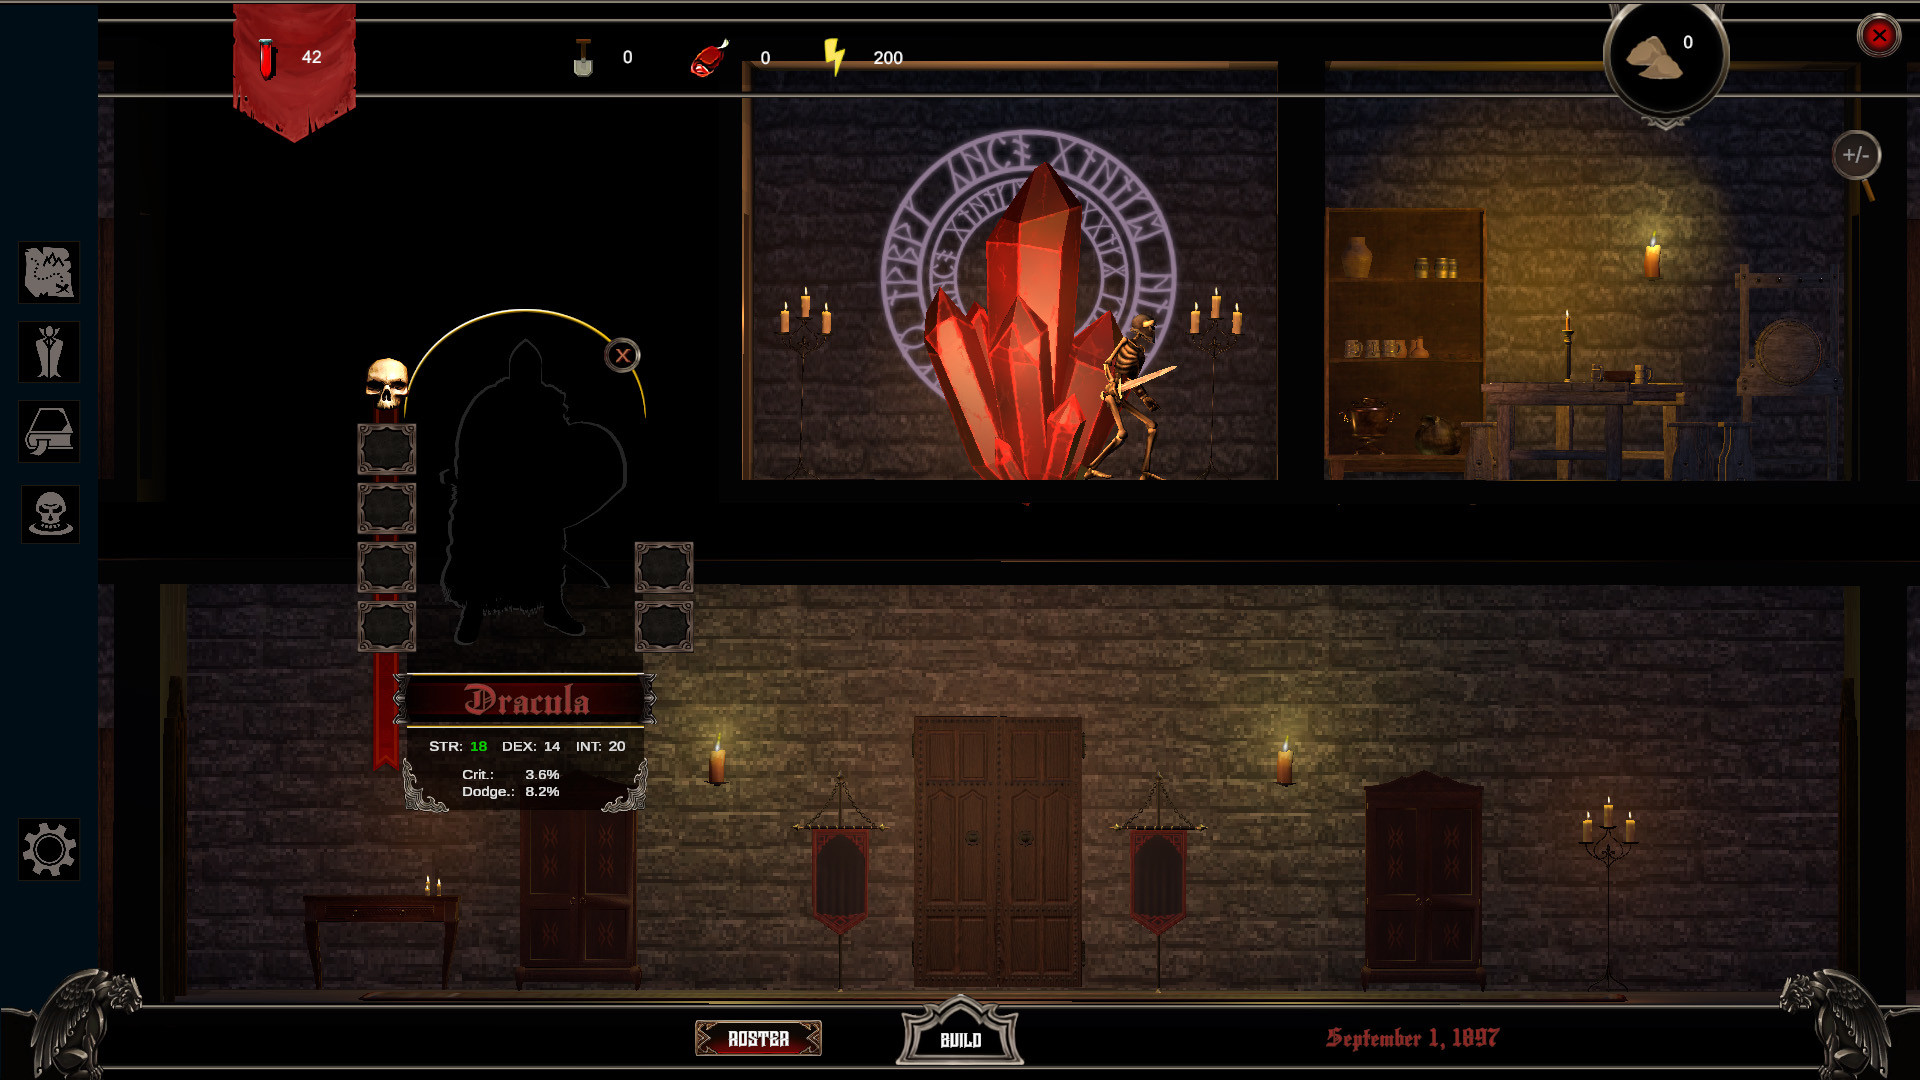 Dracula's Castle screenshot